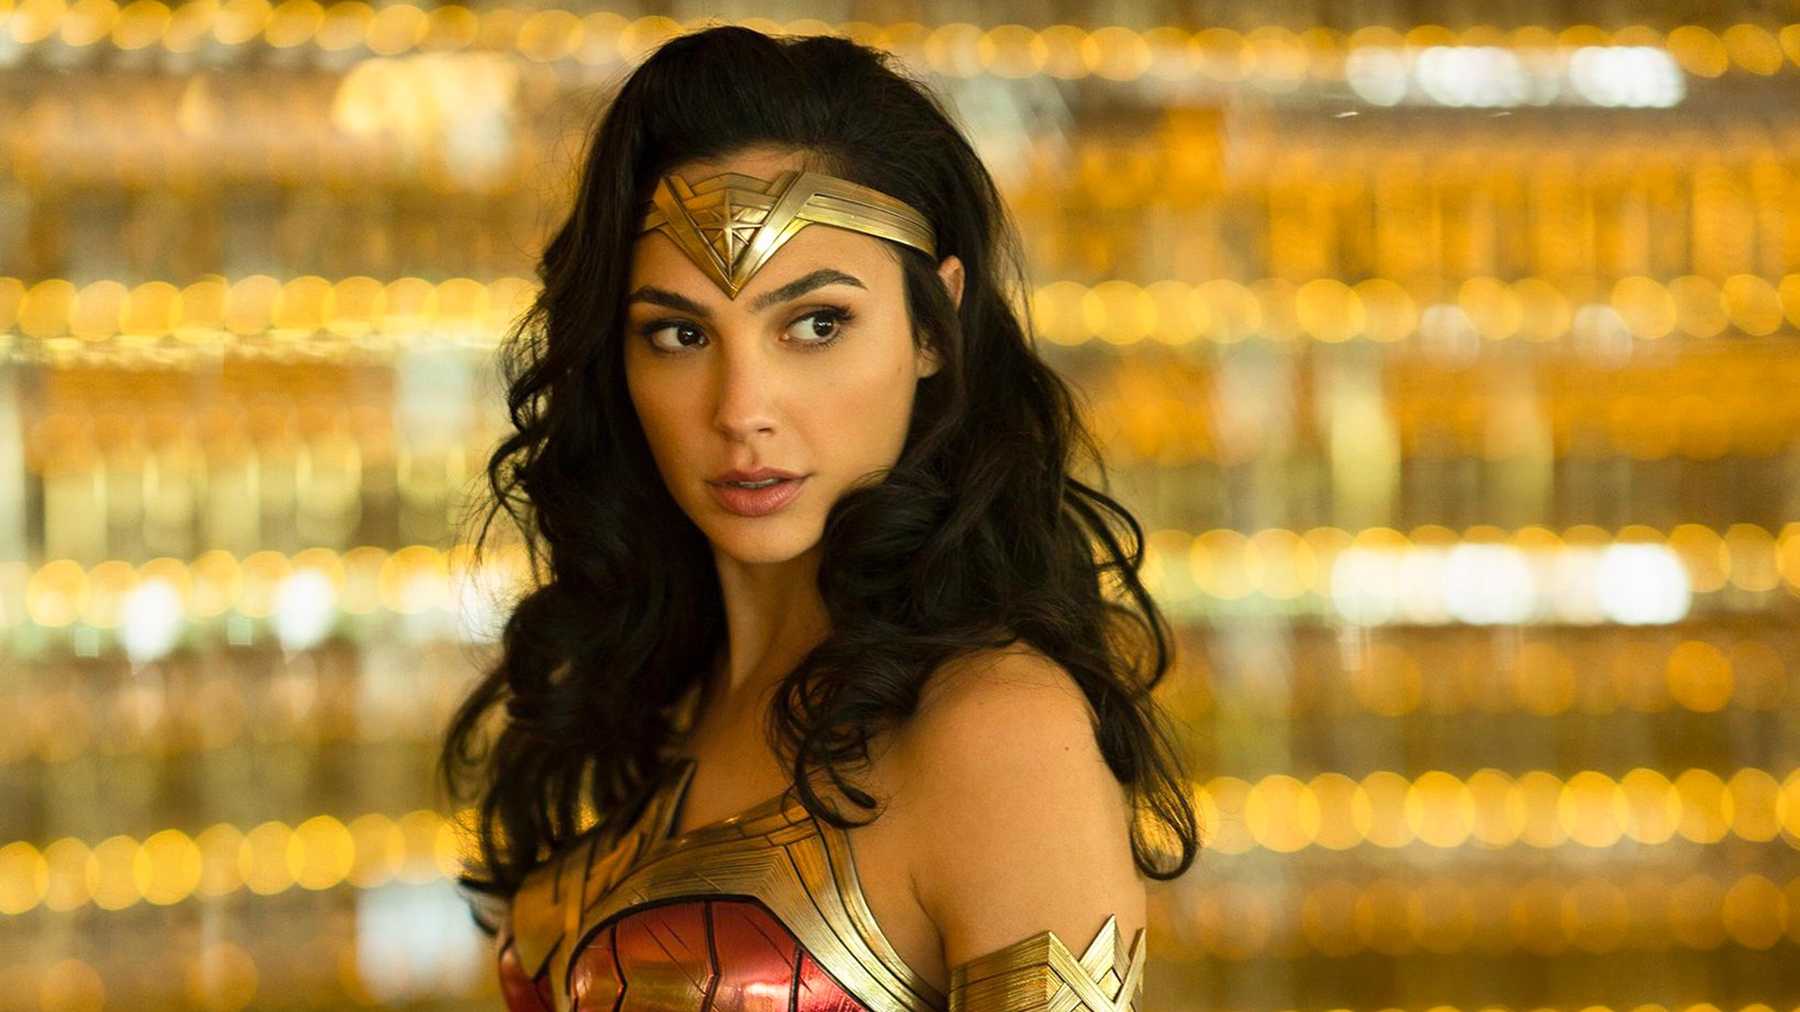 $ 152 million in revenue from Wonder Woman 1984 around the world